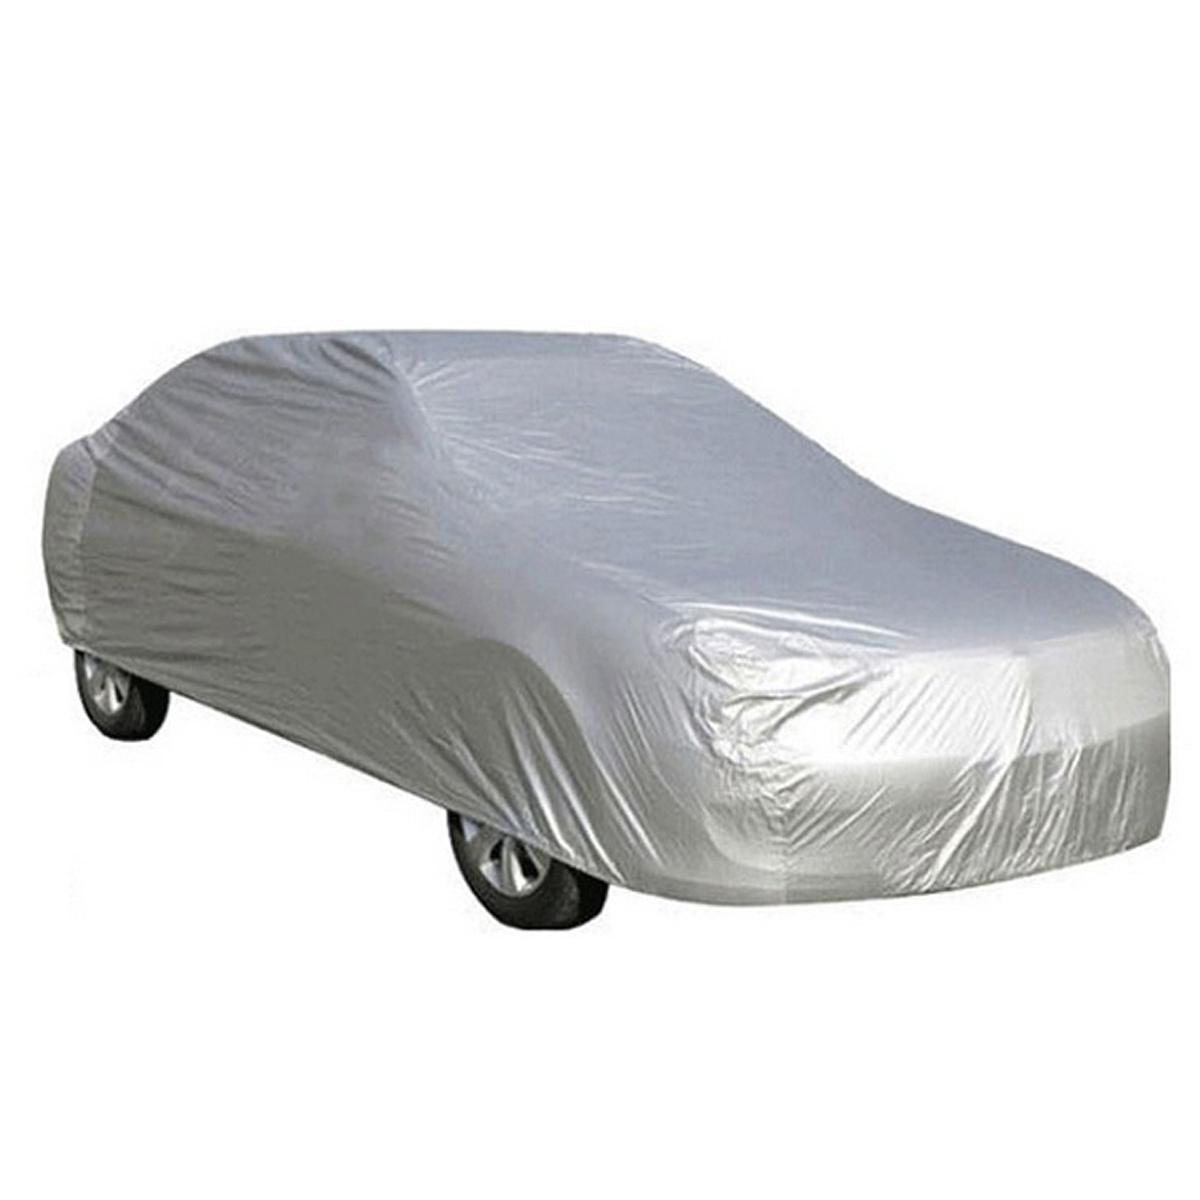 470x188x175cm-PEVA-Car-Cover-Waterproof-Anti-scratch-Protector-Universal-1404737